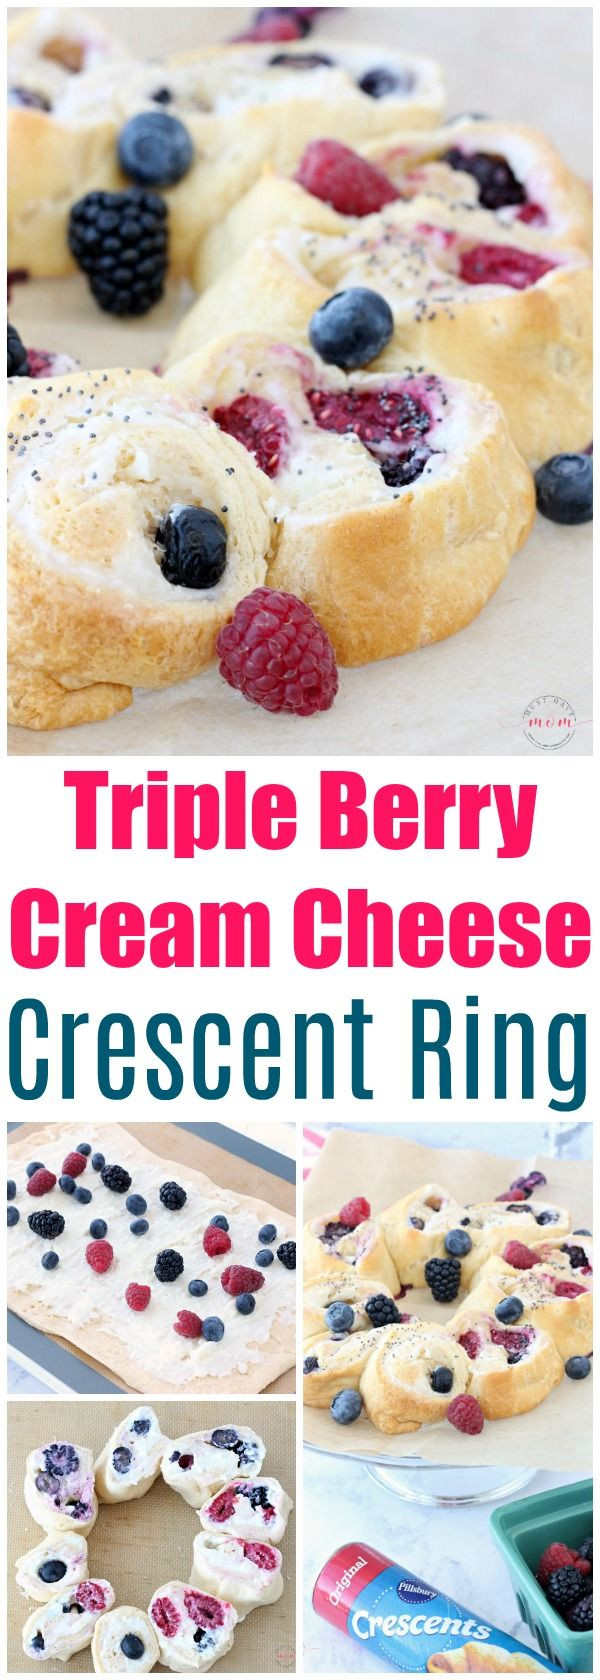 Pillsbury Crescent Roll Breakfast Recipe
 Triple berry cream cheese Pillsbury crescent roll